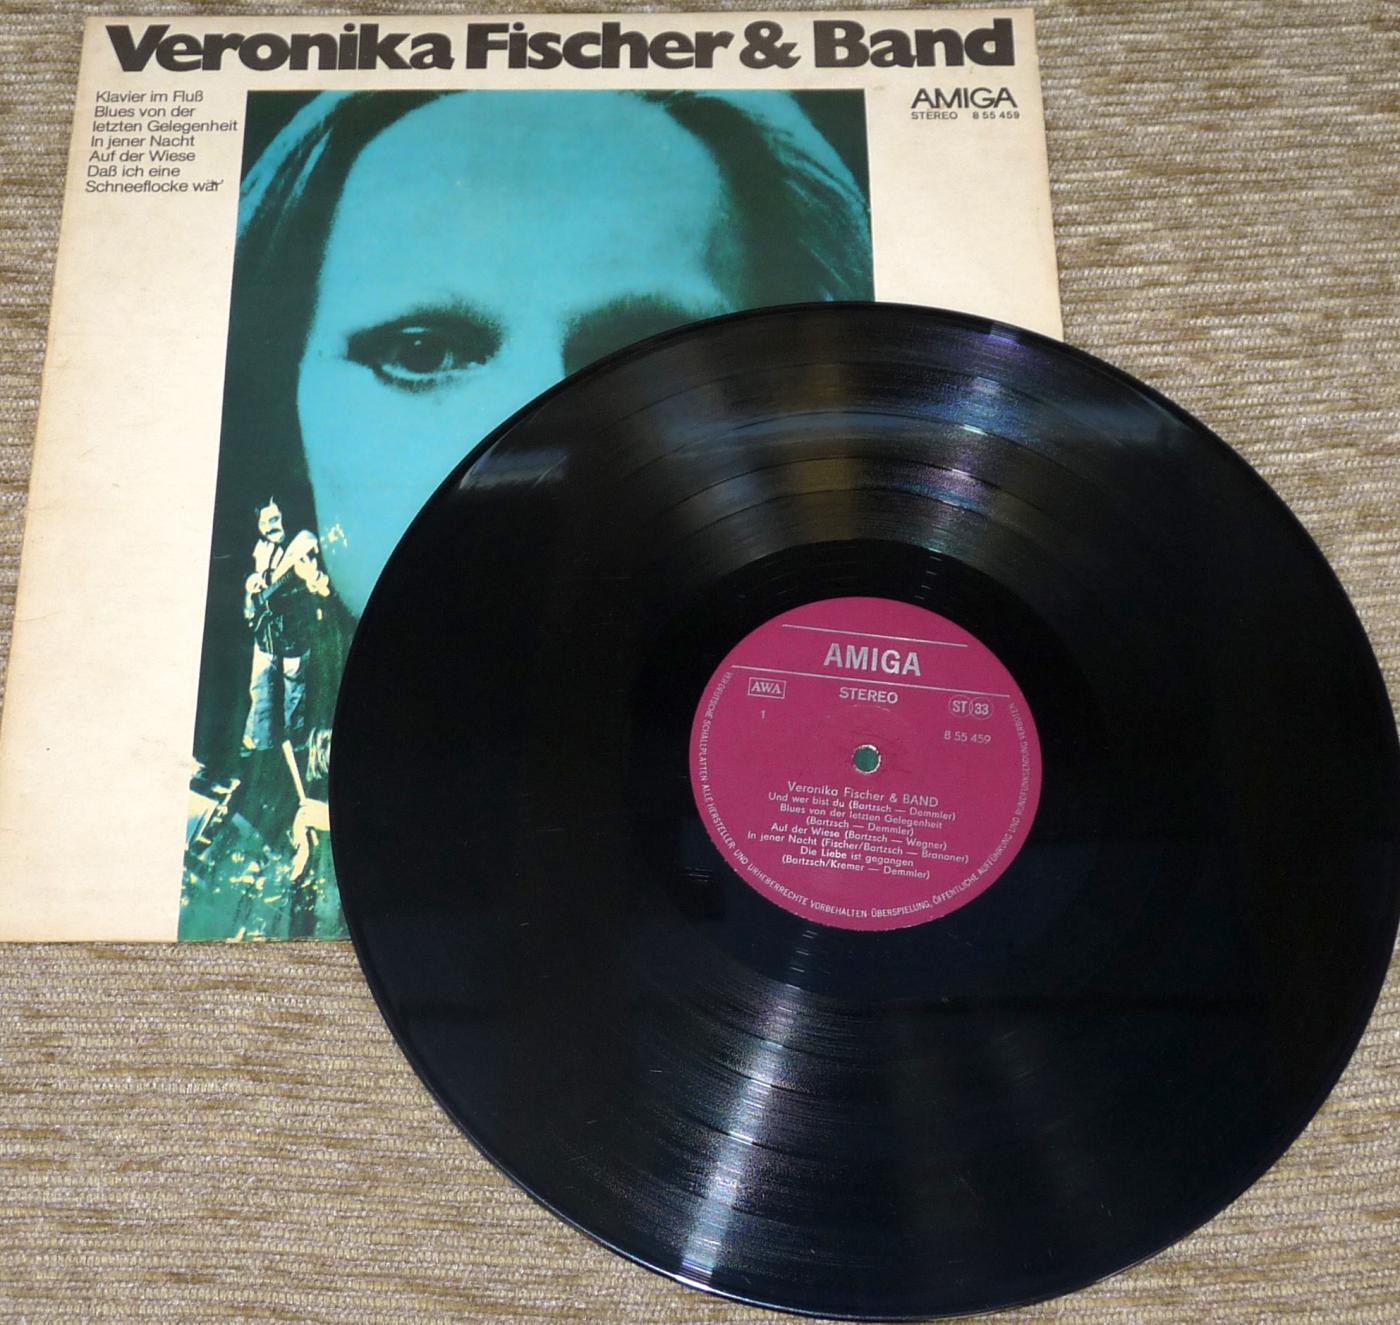 Veronika Fischer & Band - 1, Amiga, 855459